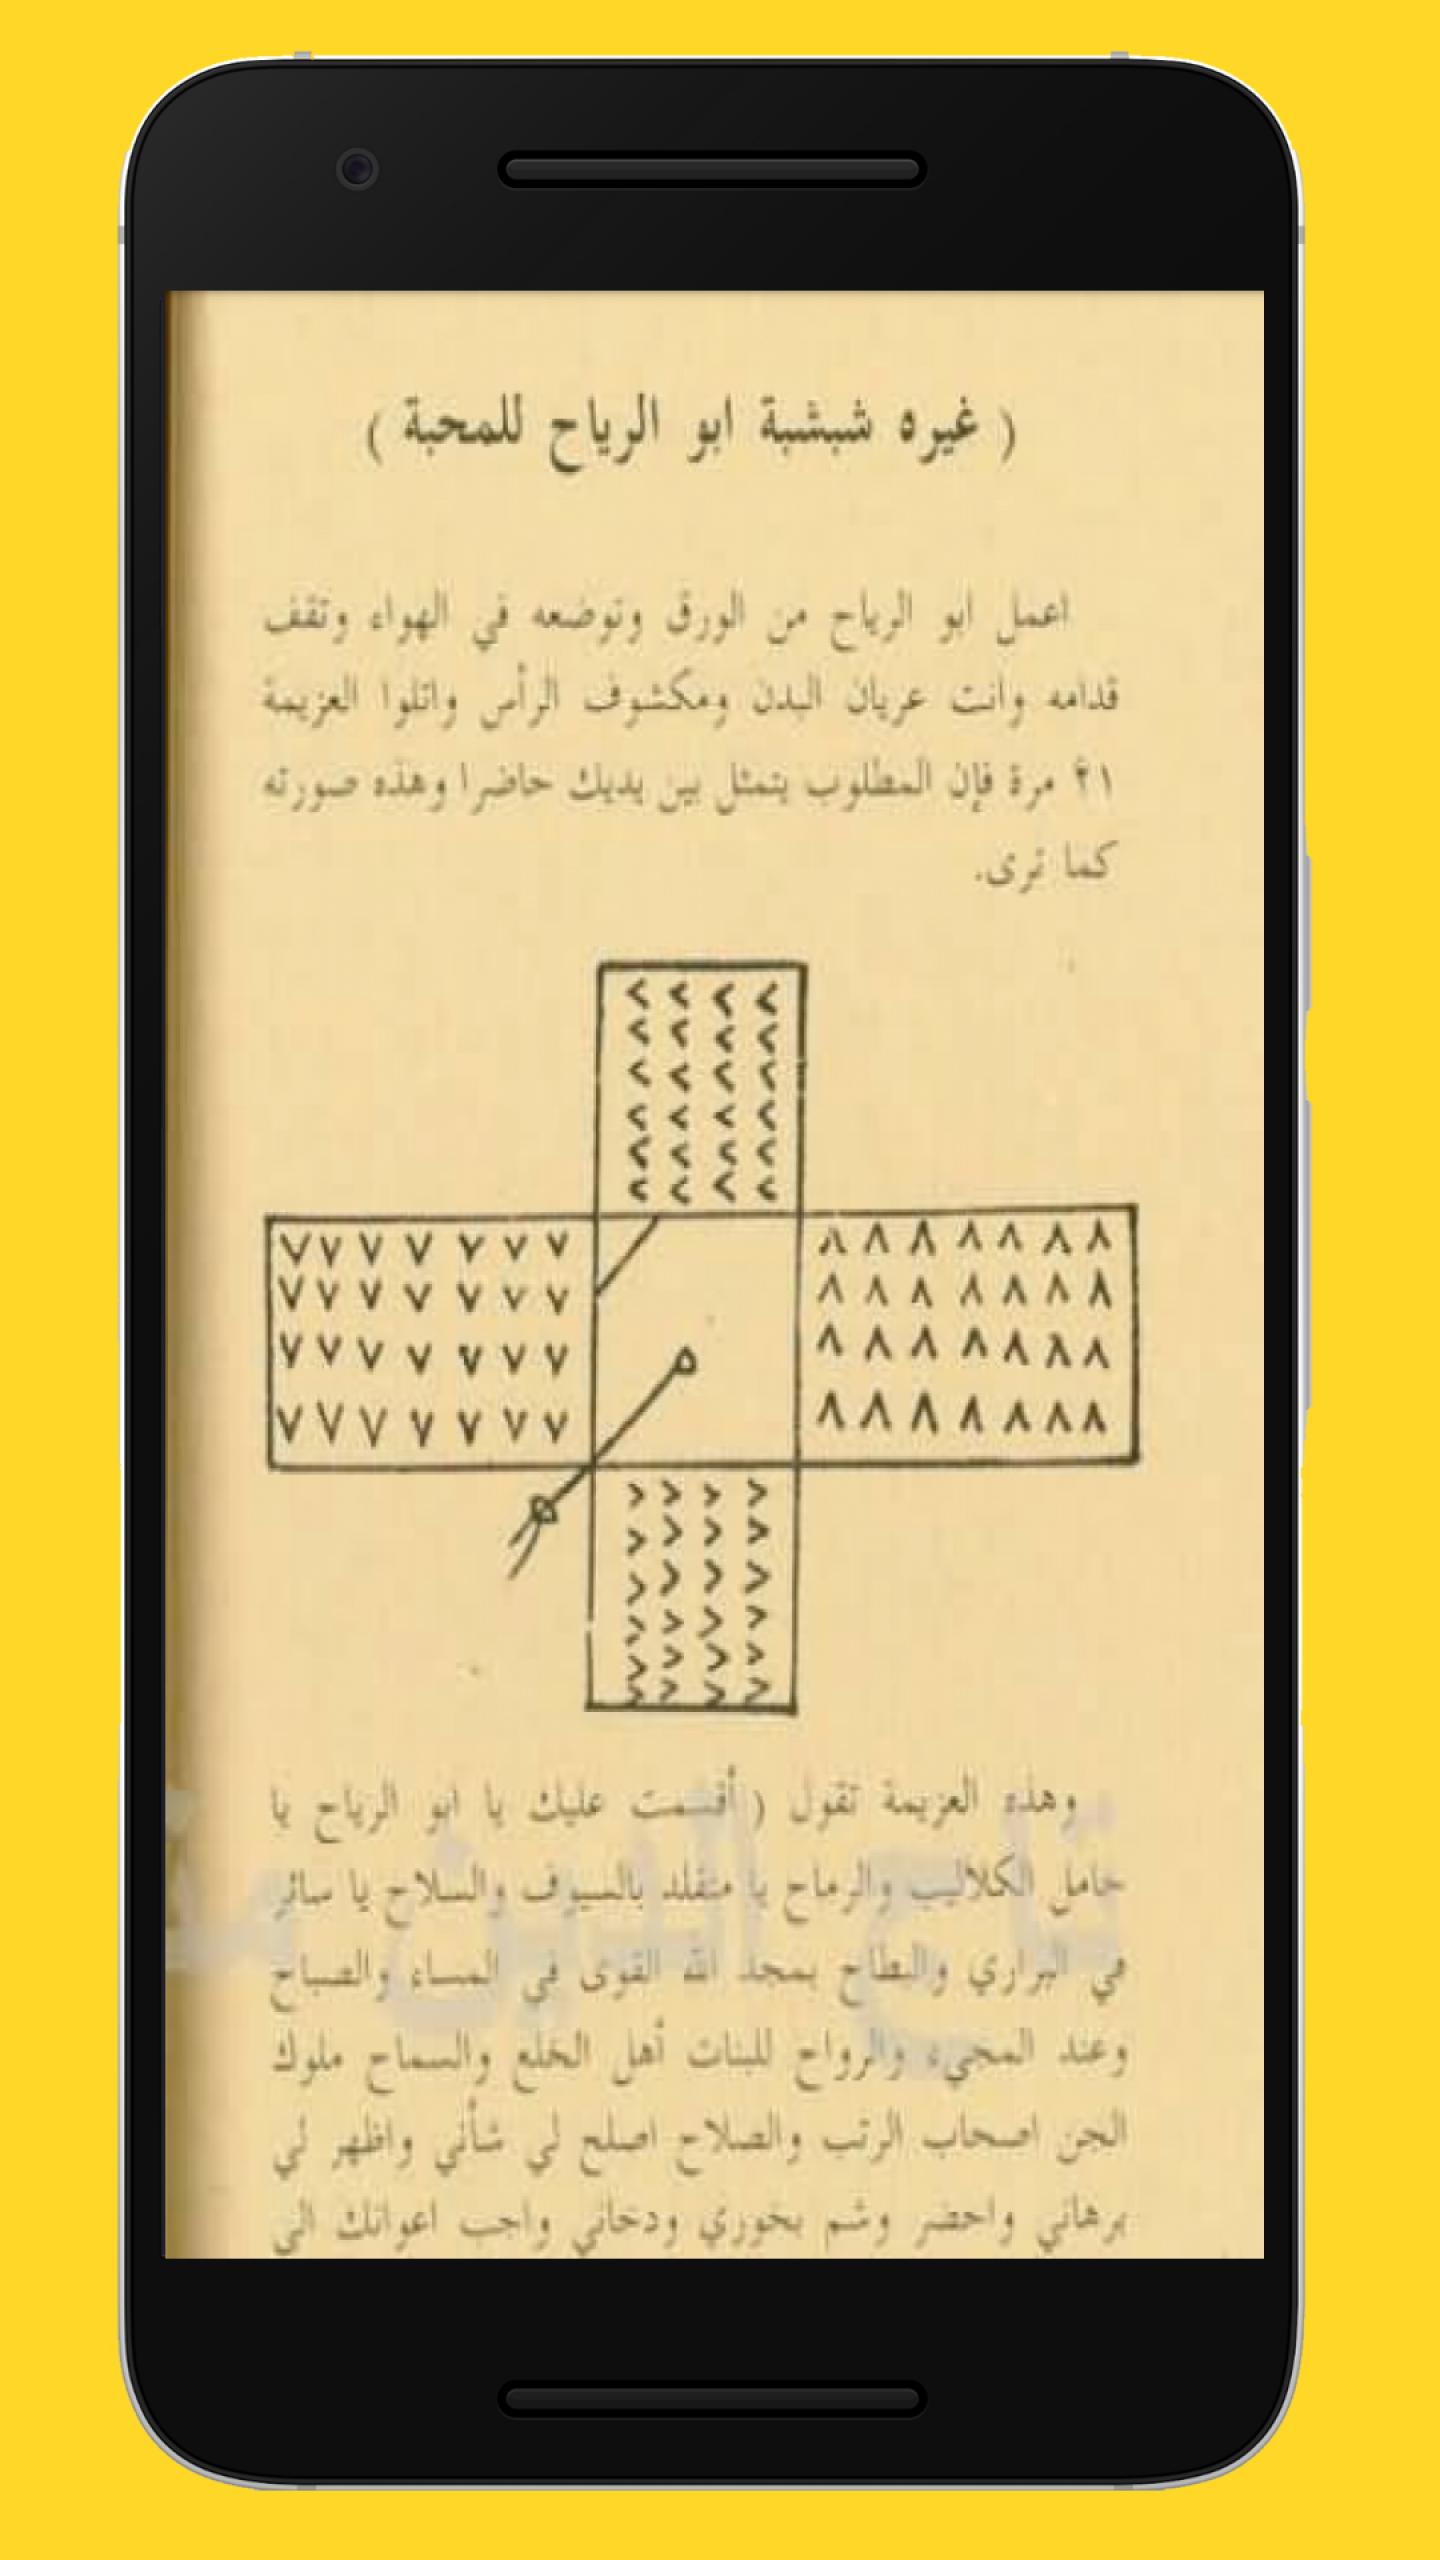 سحر الكهان في تحضير الجان pdf for Android - APK Download